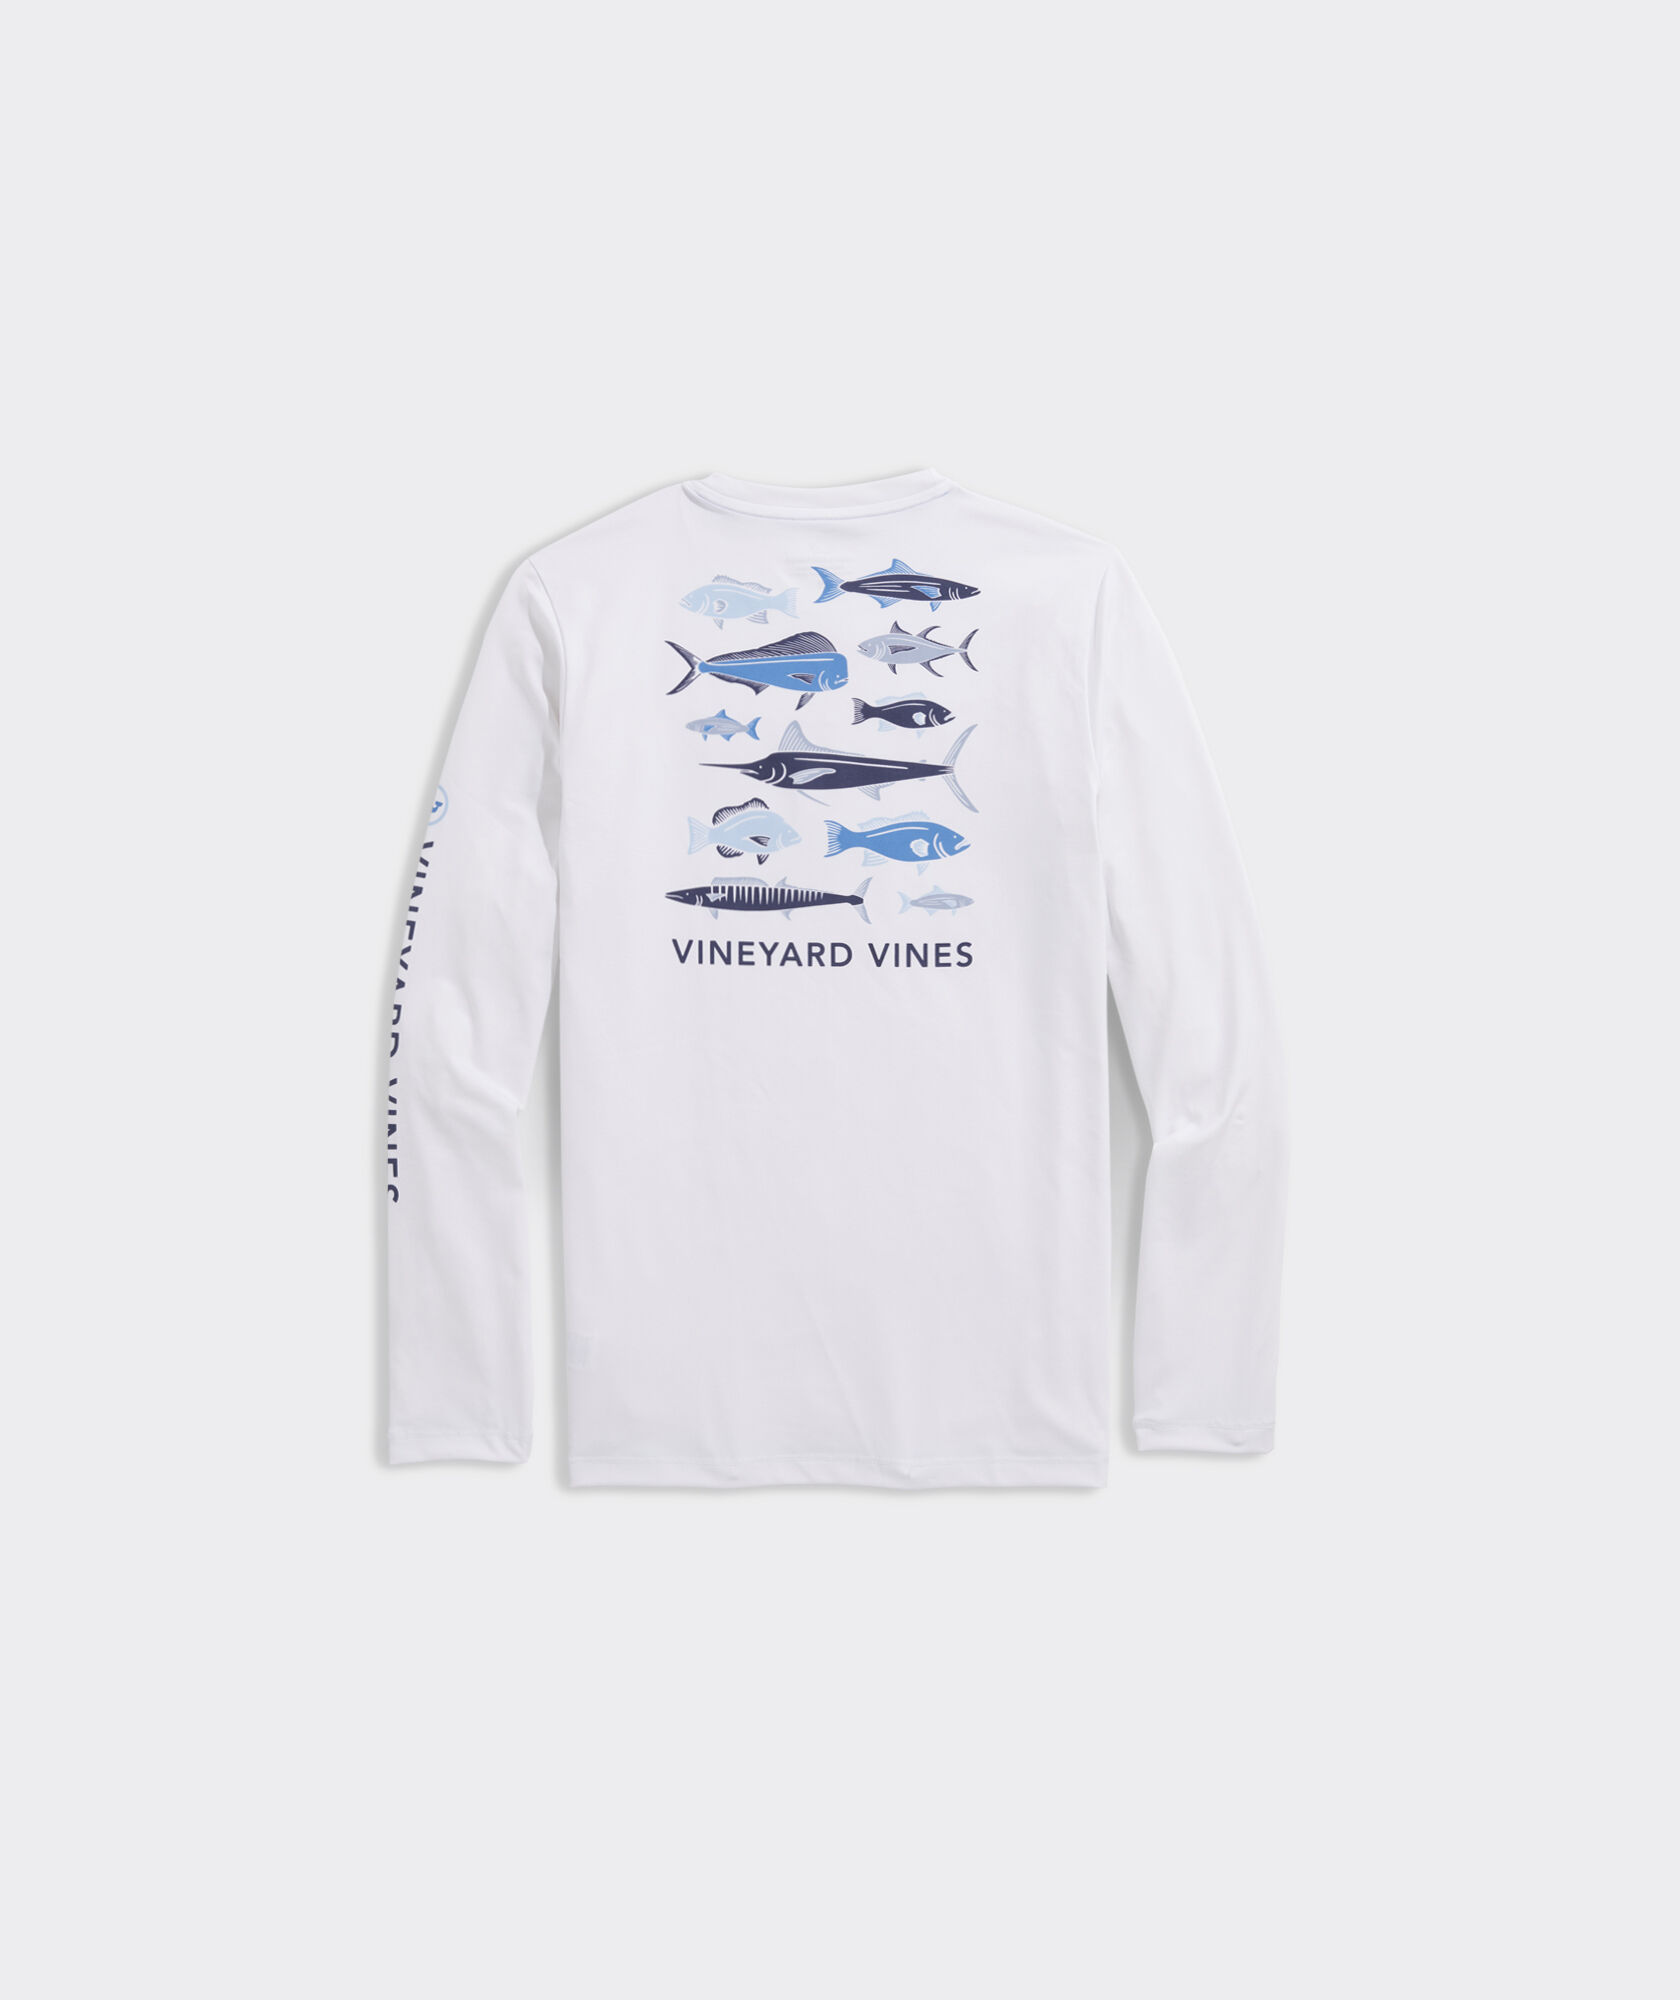 VINEYARD VINES Shirt Mens XL Blue Performance Long Sleeve Catch Release  fishing